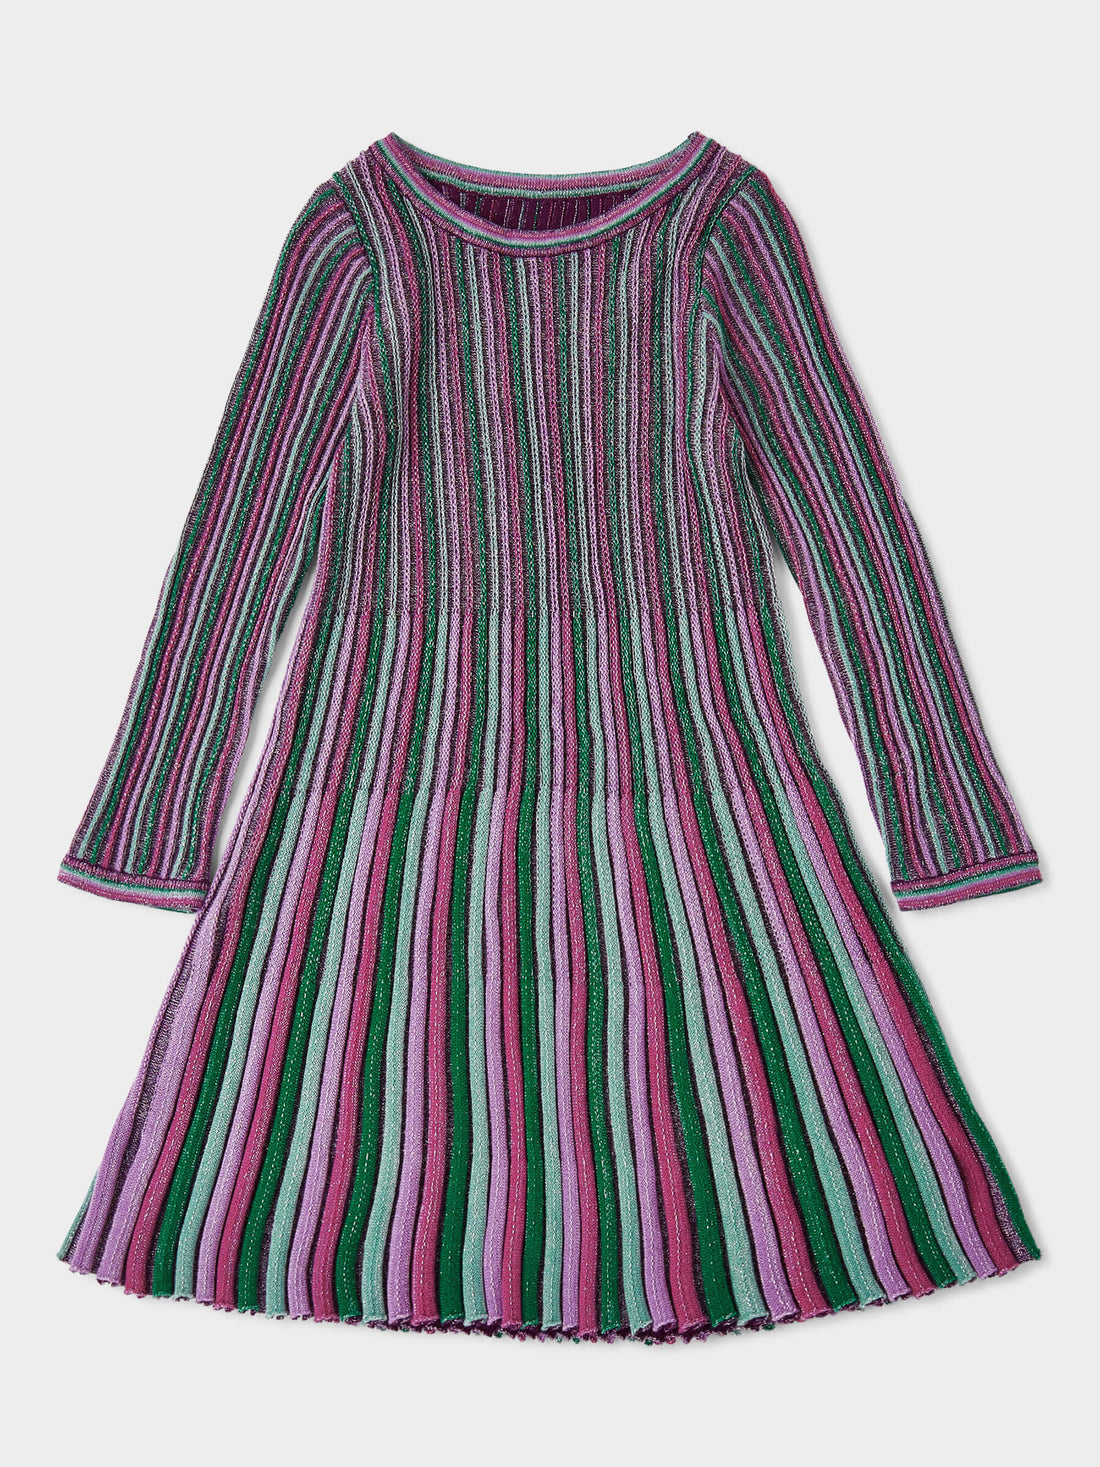 Chloe Knitted Dress